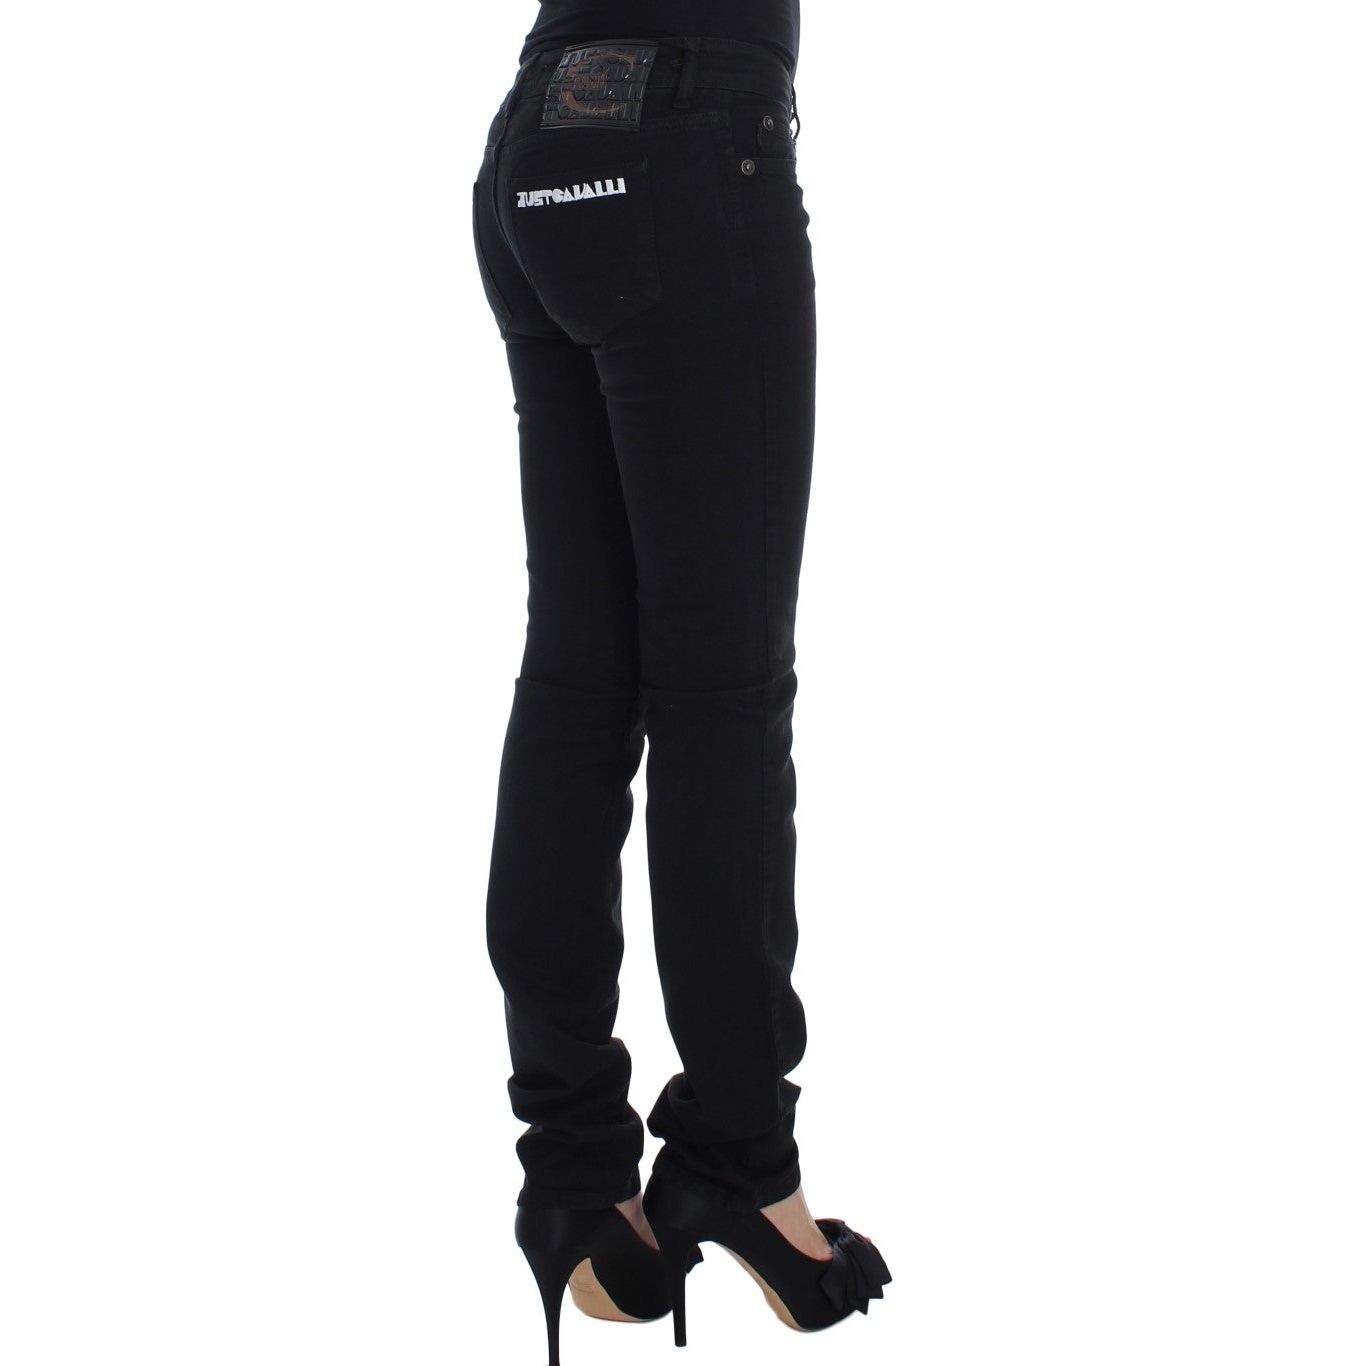 Cavalli | Black Cotton Stretch Slim Skinny Fit Jeans | McRichard Designer Brands